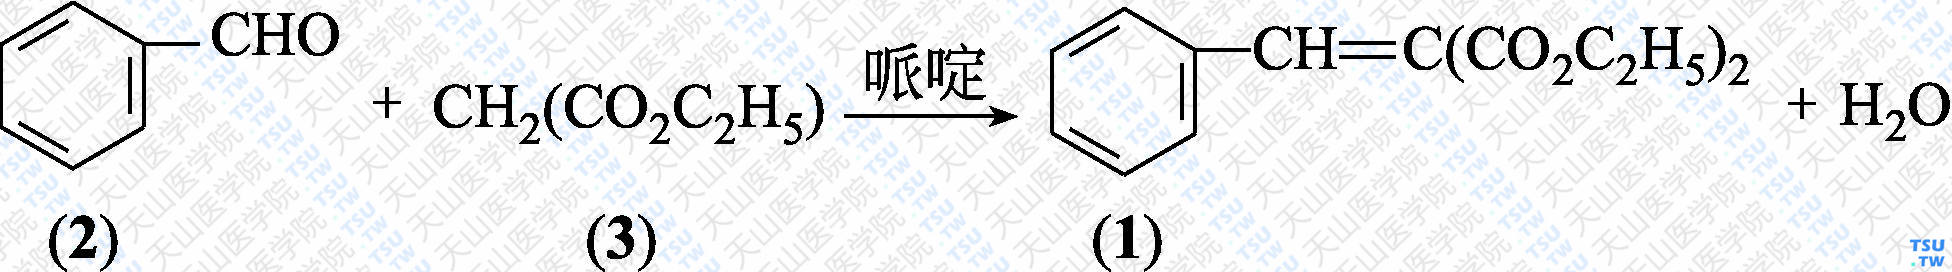 苯亚甲基丙二酸二乙酯（分子式：C<sub>14</sub>H<sub>16</sub>O<sub>4</sub>）的合成方法路线及其结构式